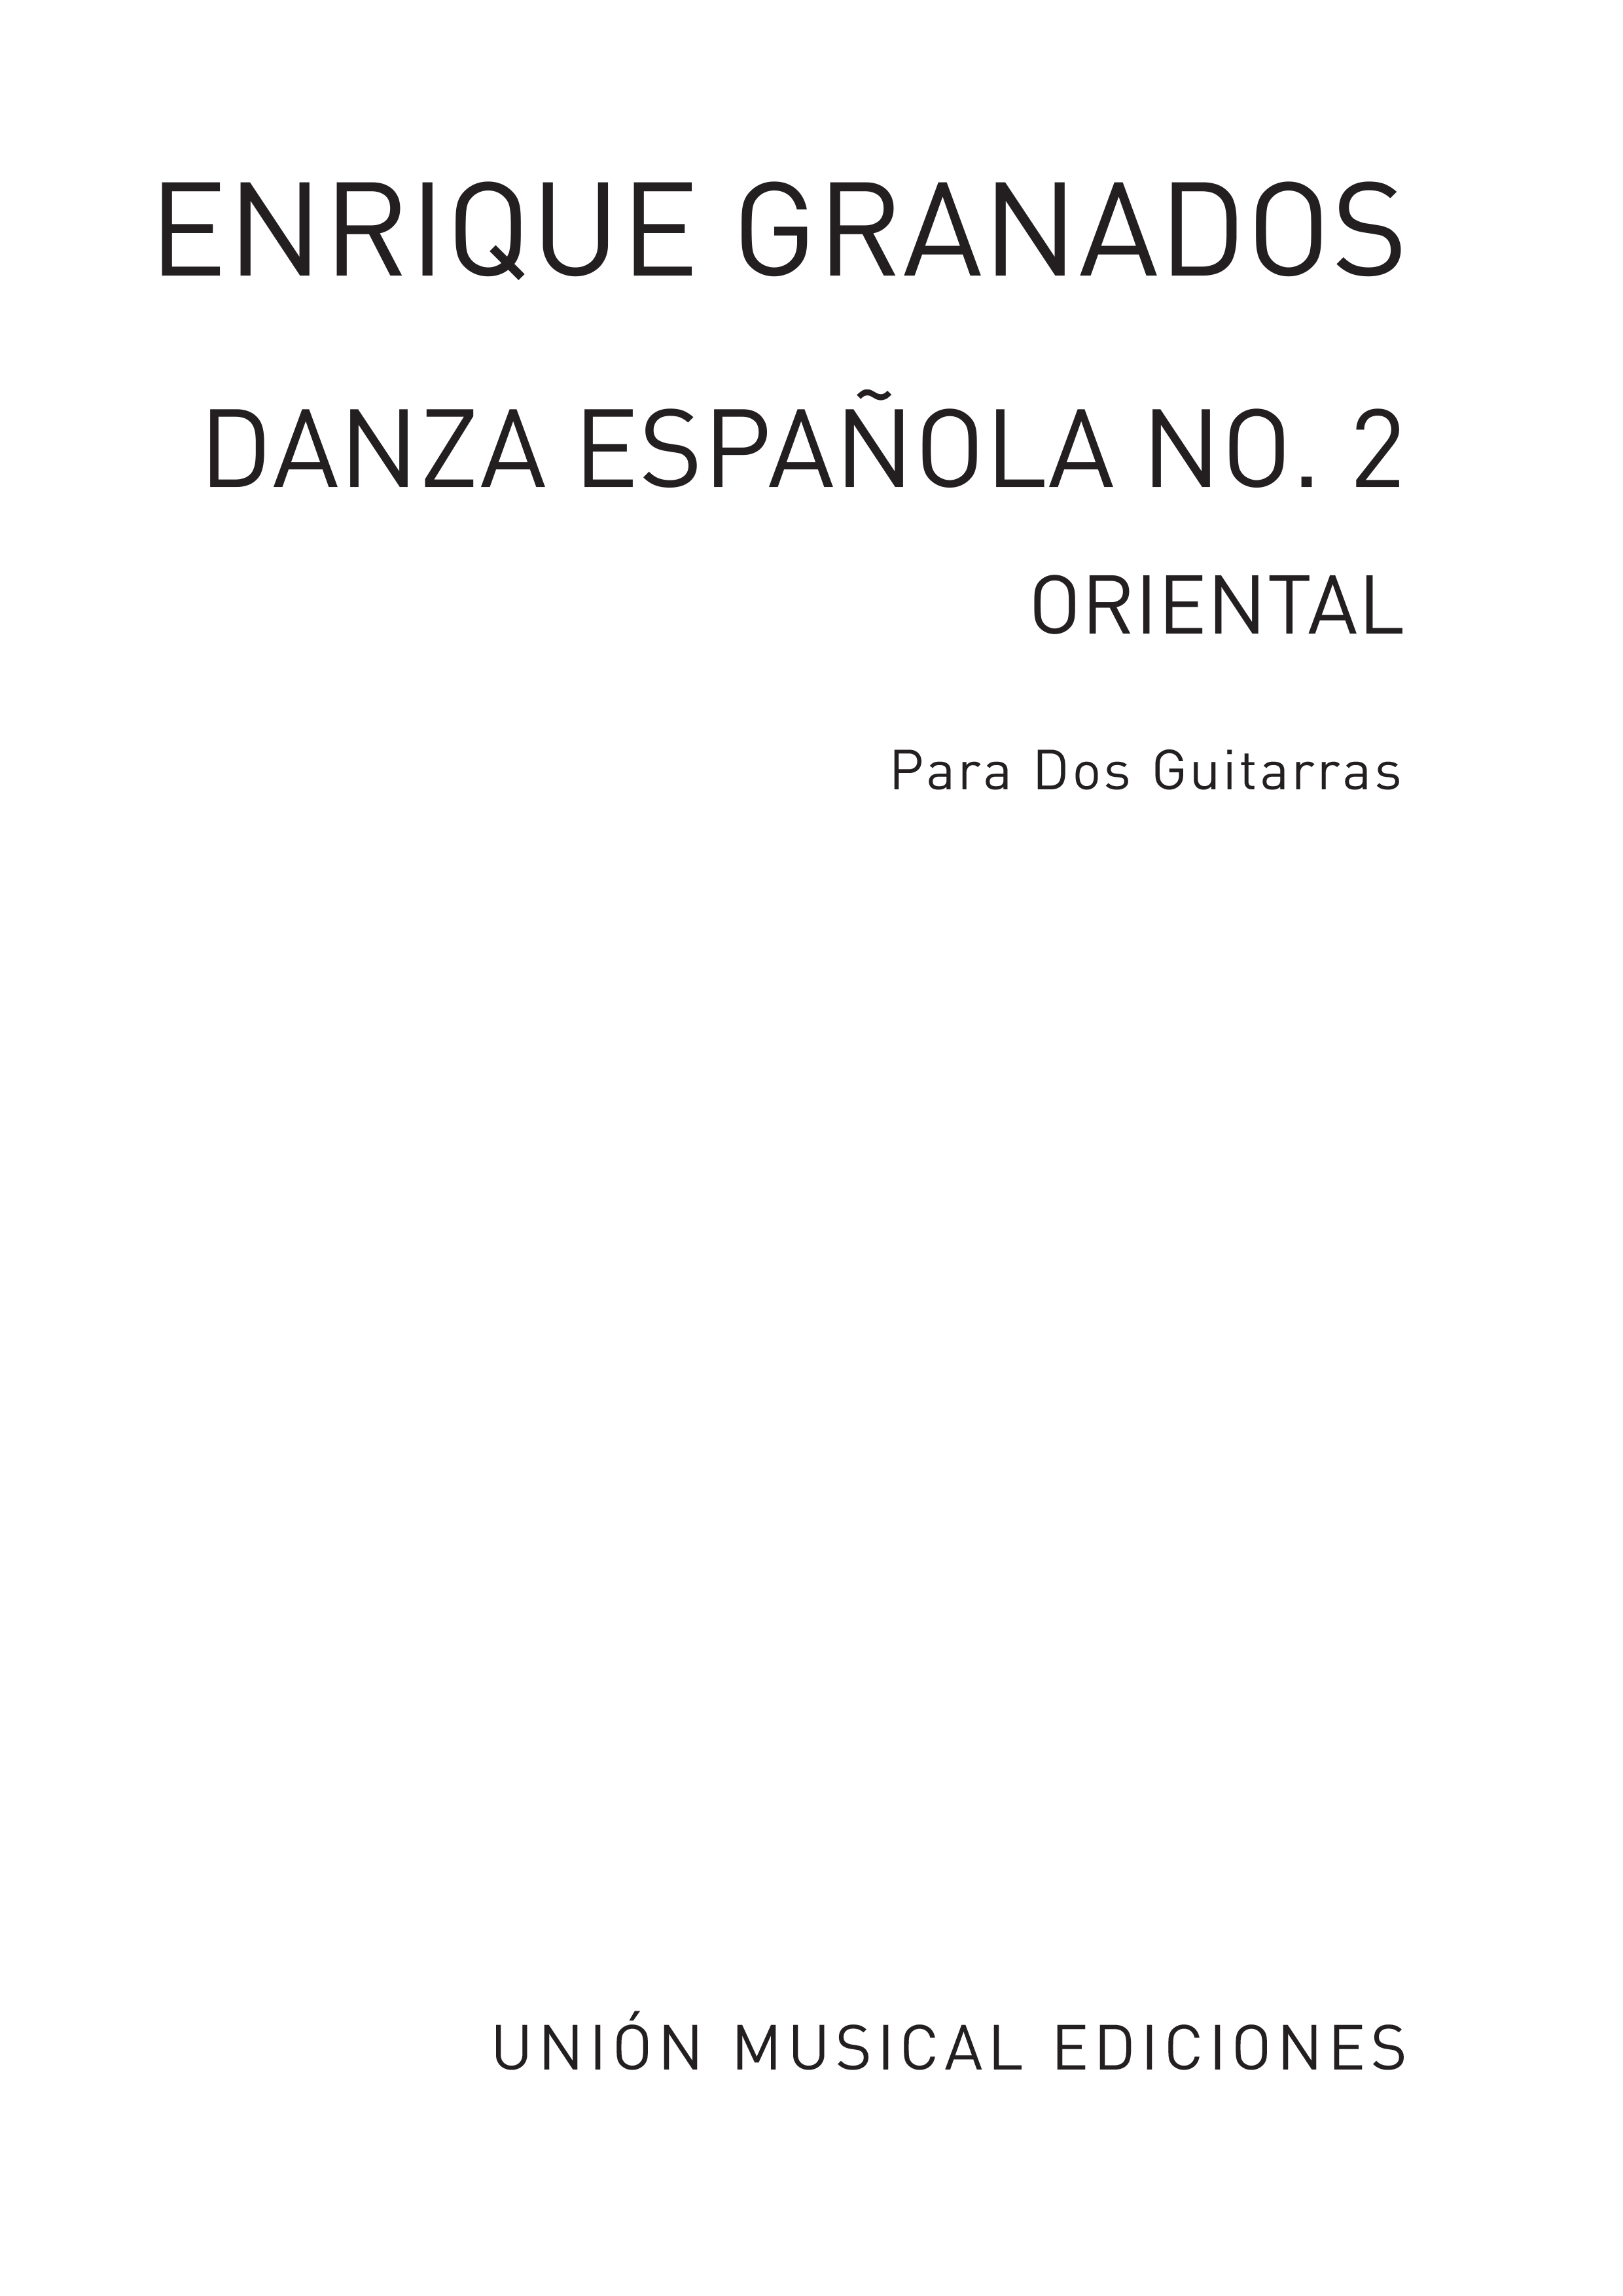 Enrique Granados: Danza Espanola No.2 Oriental for 2 Guitars: Guitar Duet: